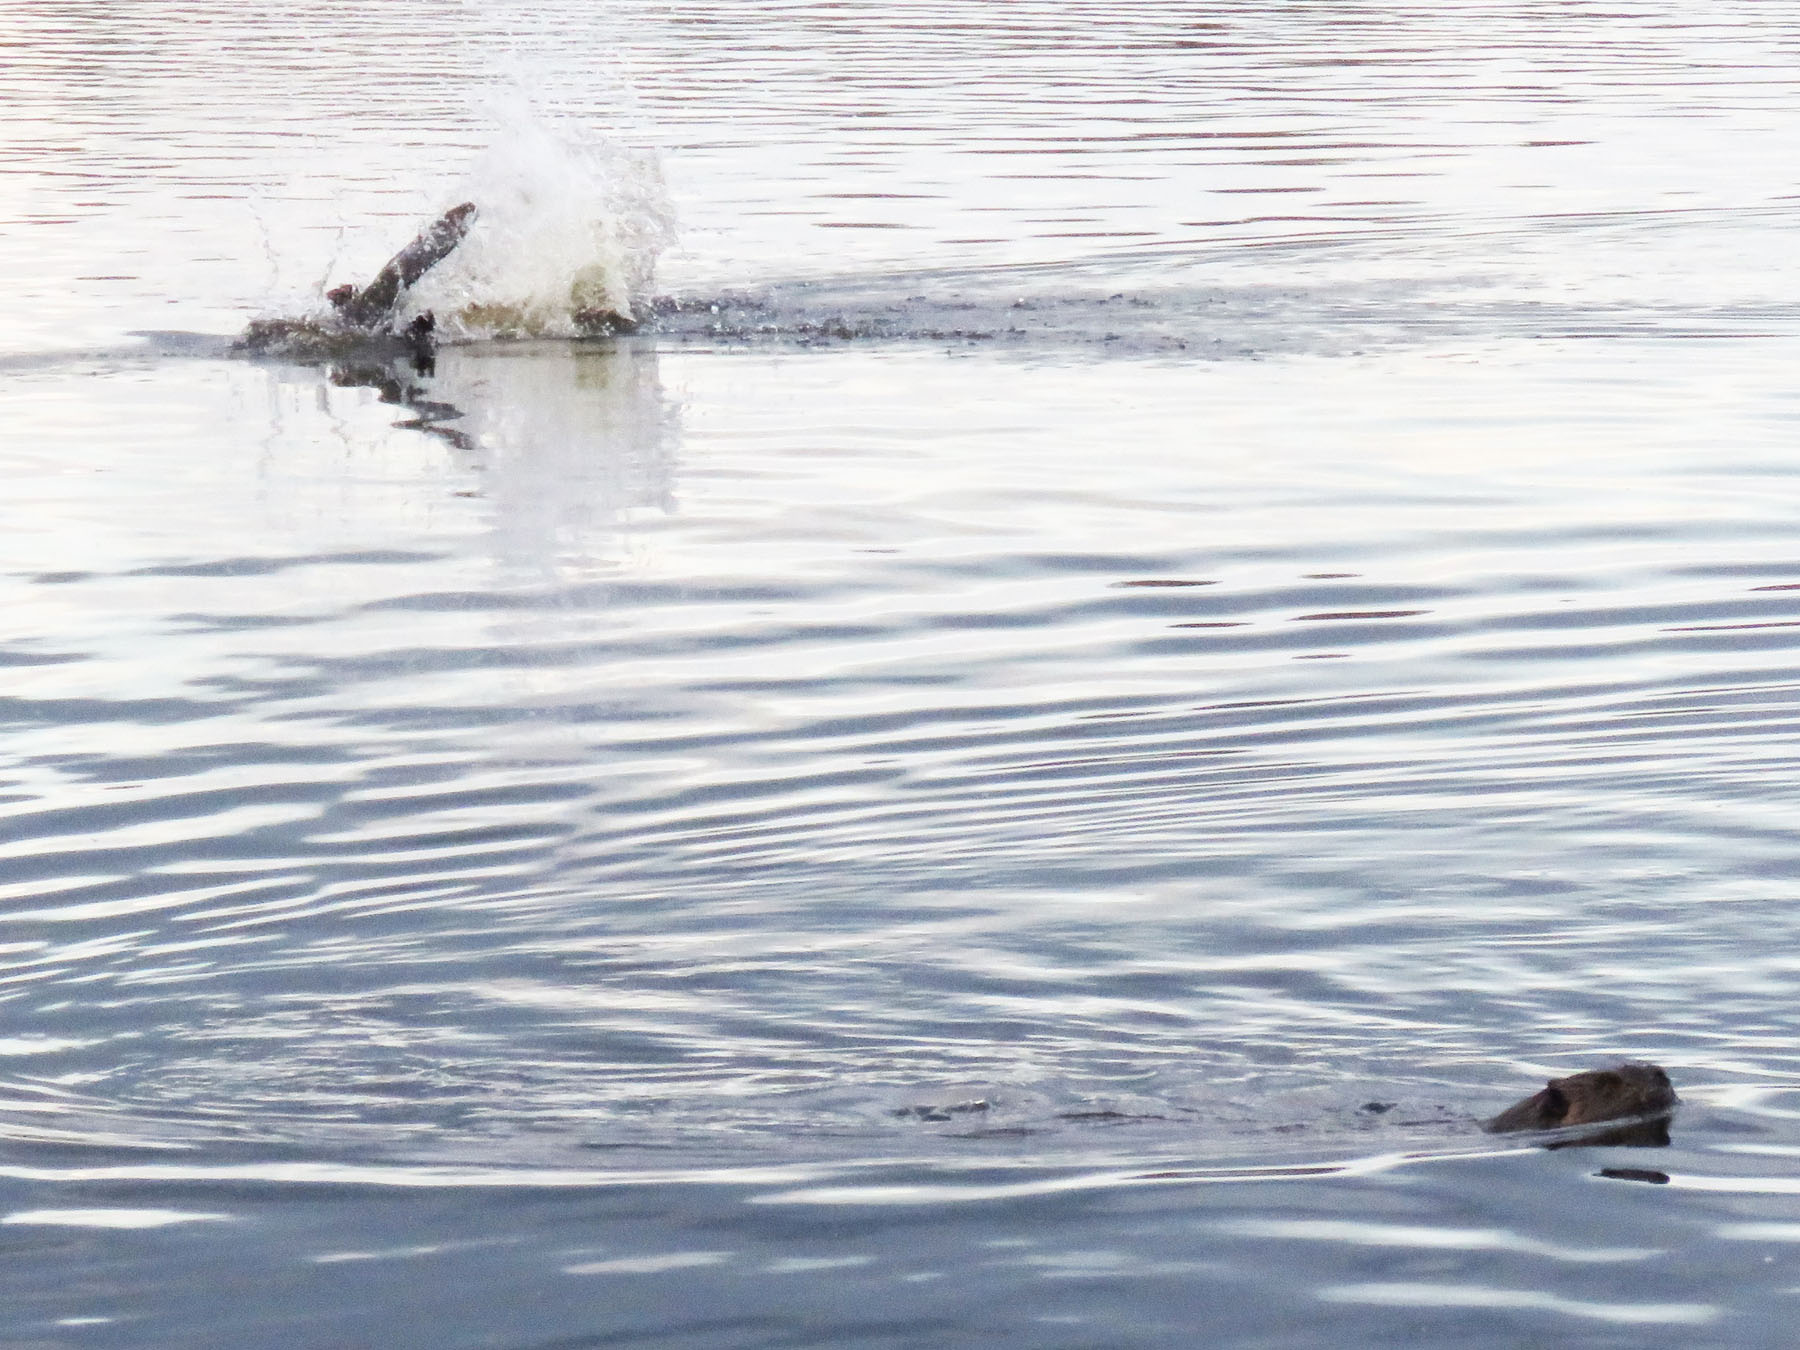 beavers splashing in the Millers River